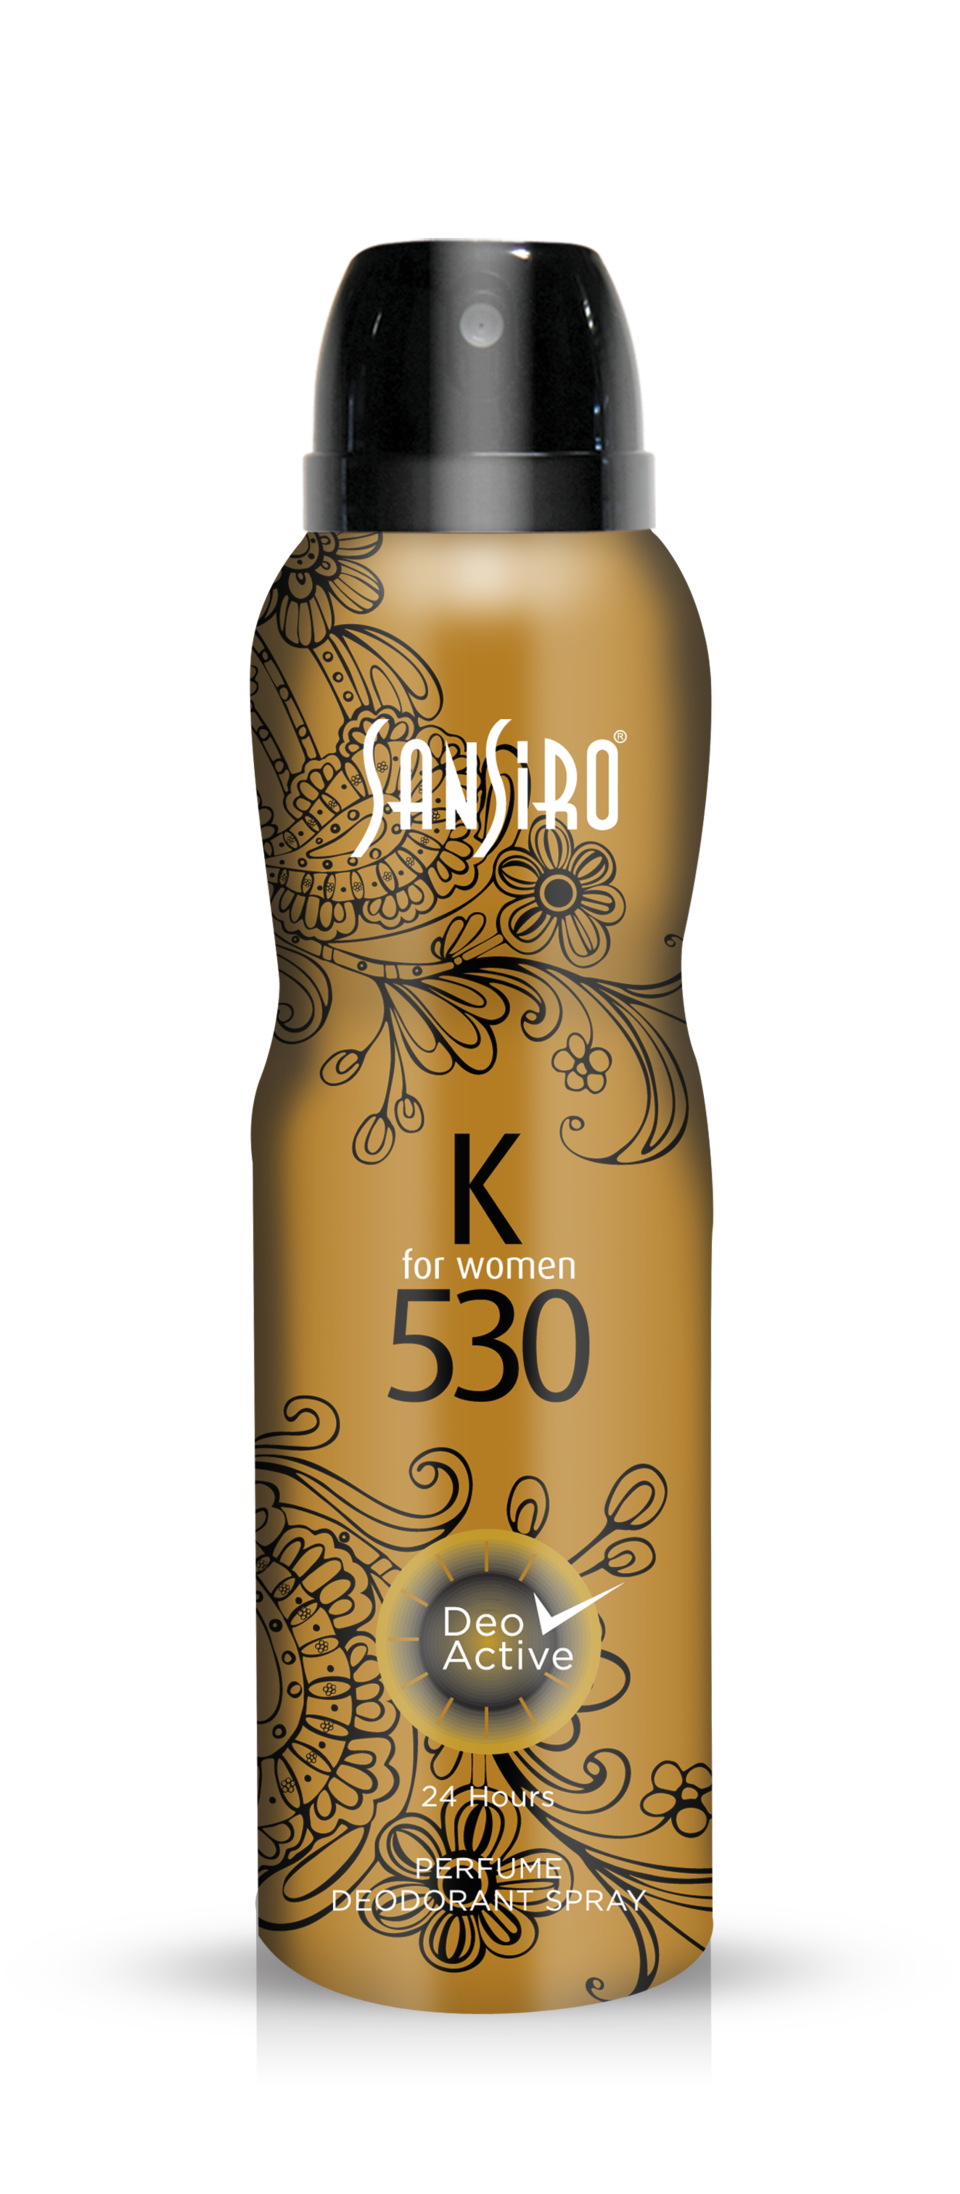 Sansiro Perfume - Deo For Women - Deodorant K530